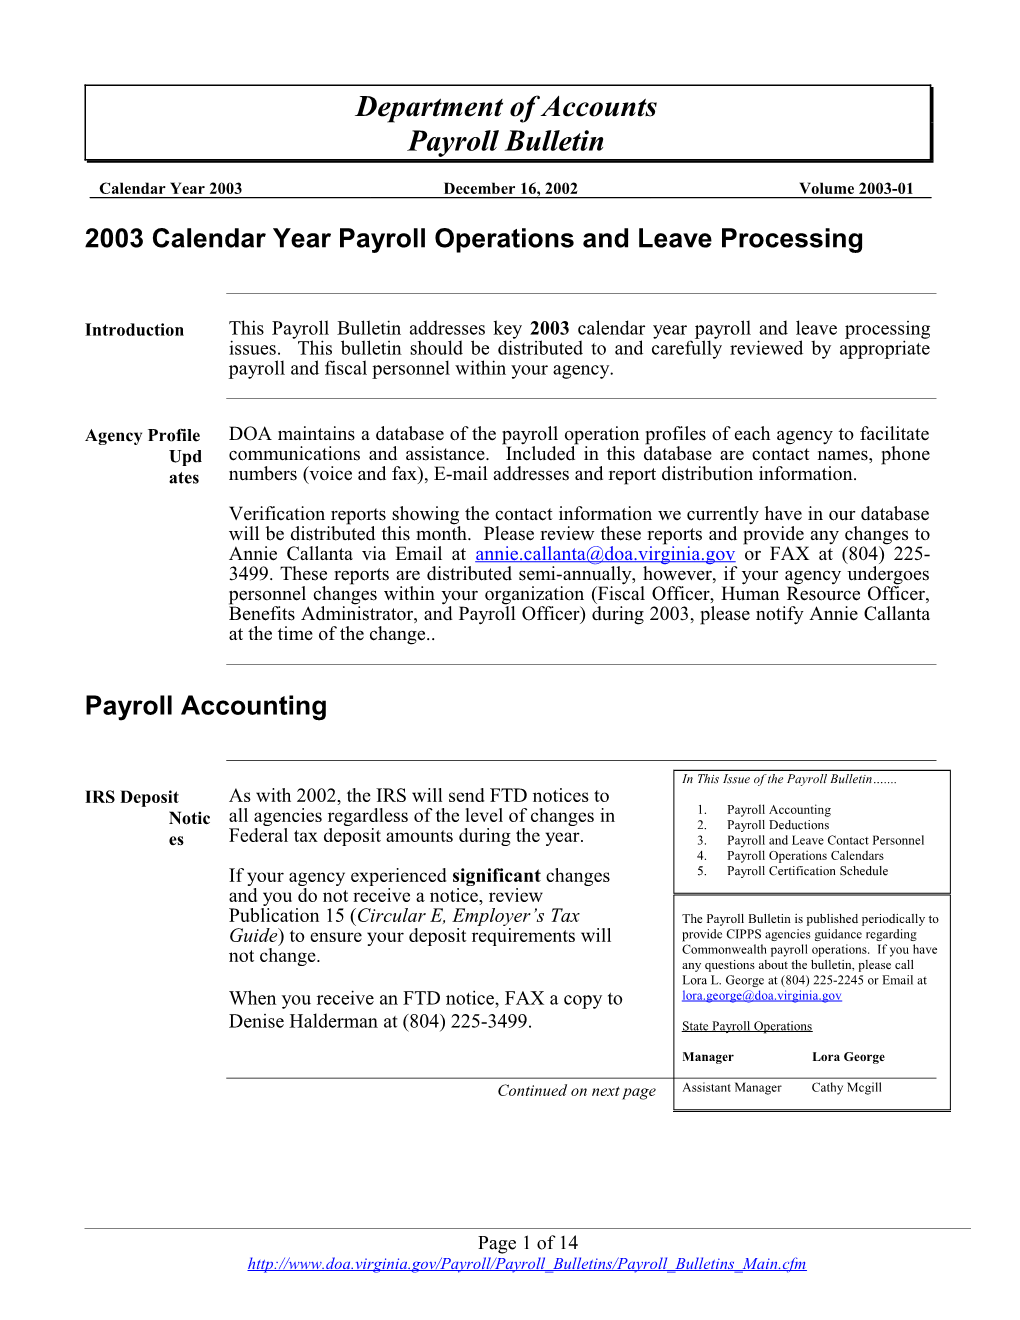 Payroll Bulletin, Volume 2003-01